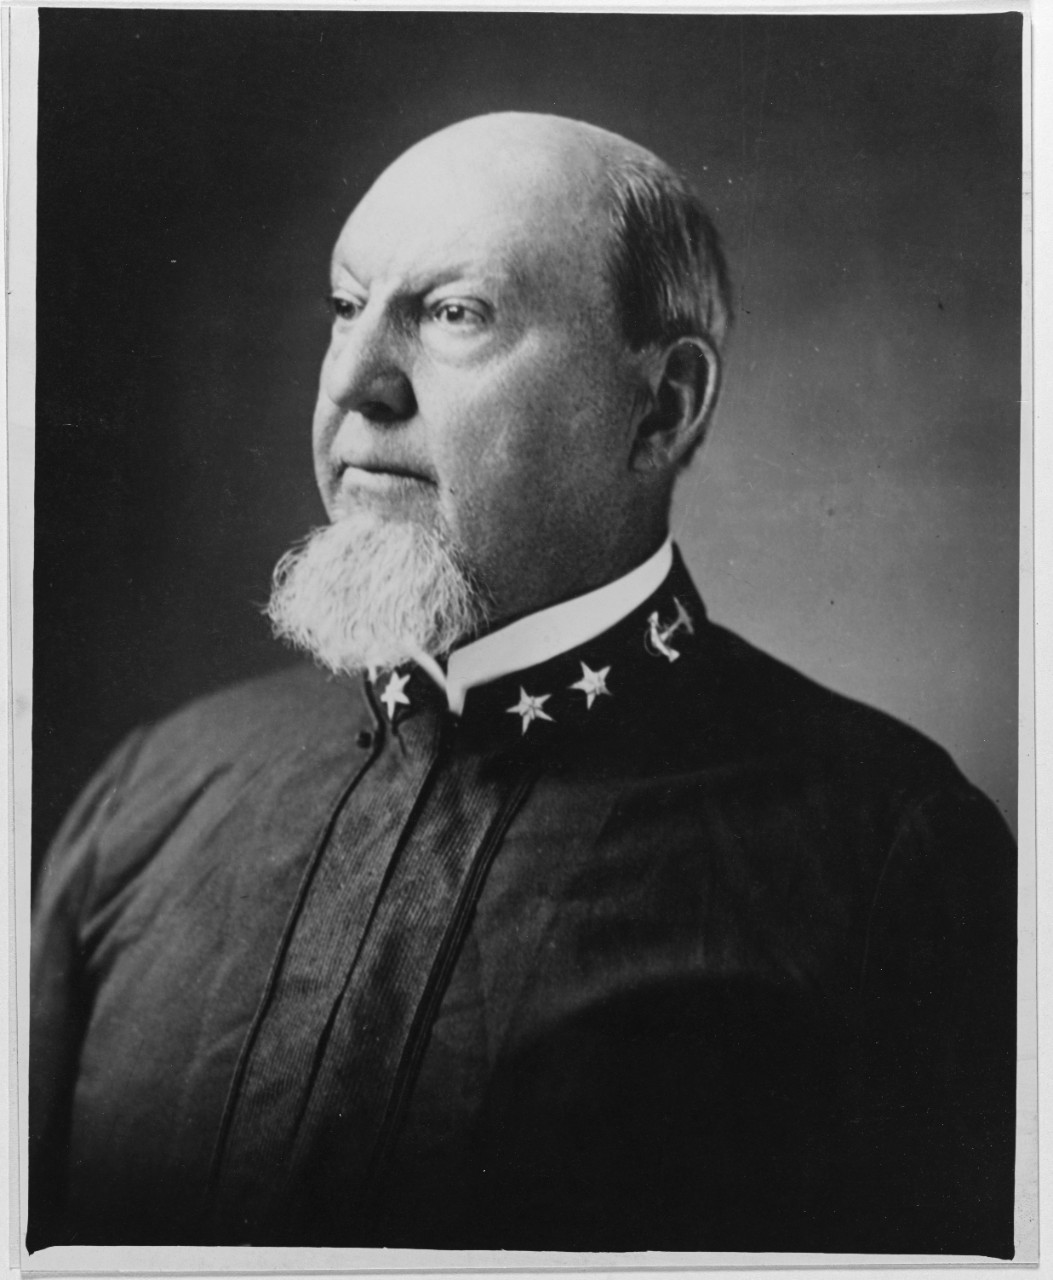 Rear Admiral James M. Forsyth, USN